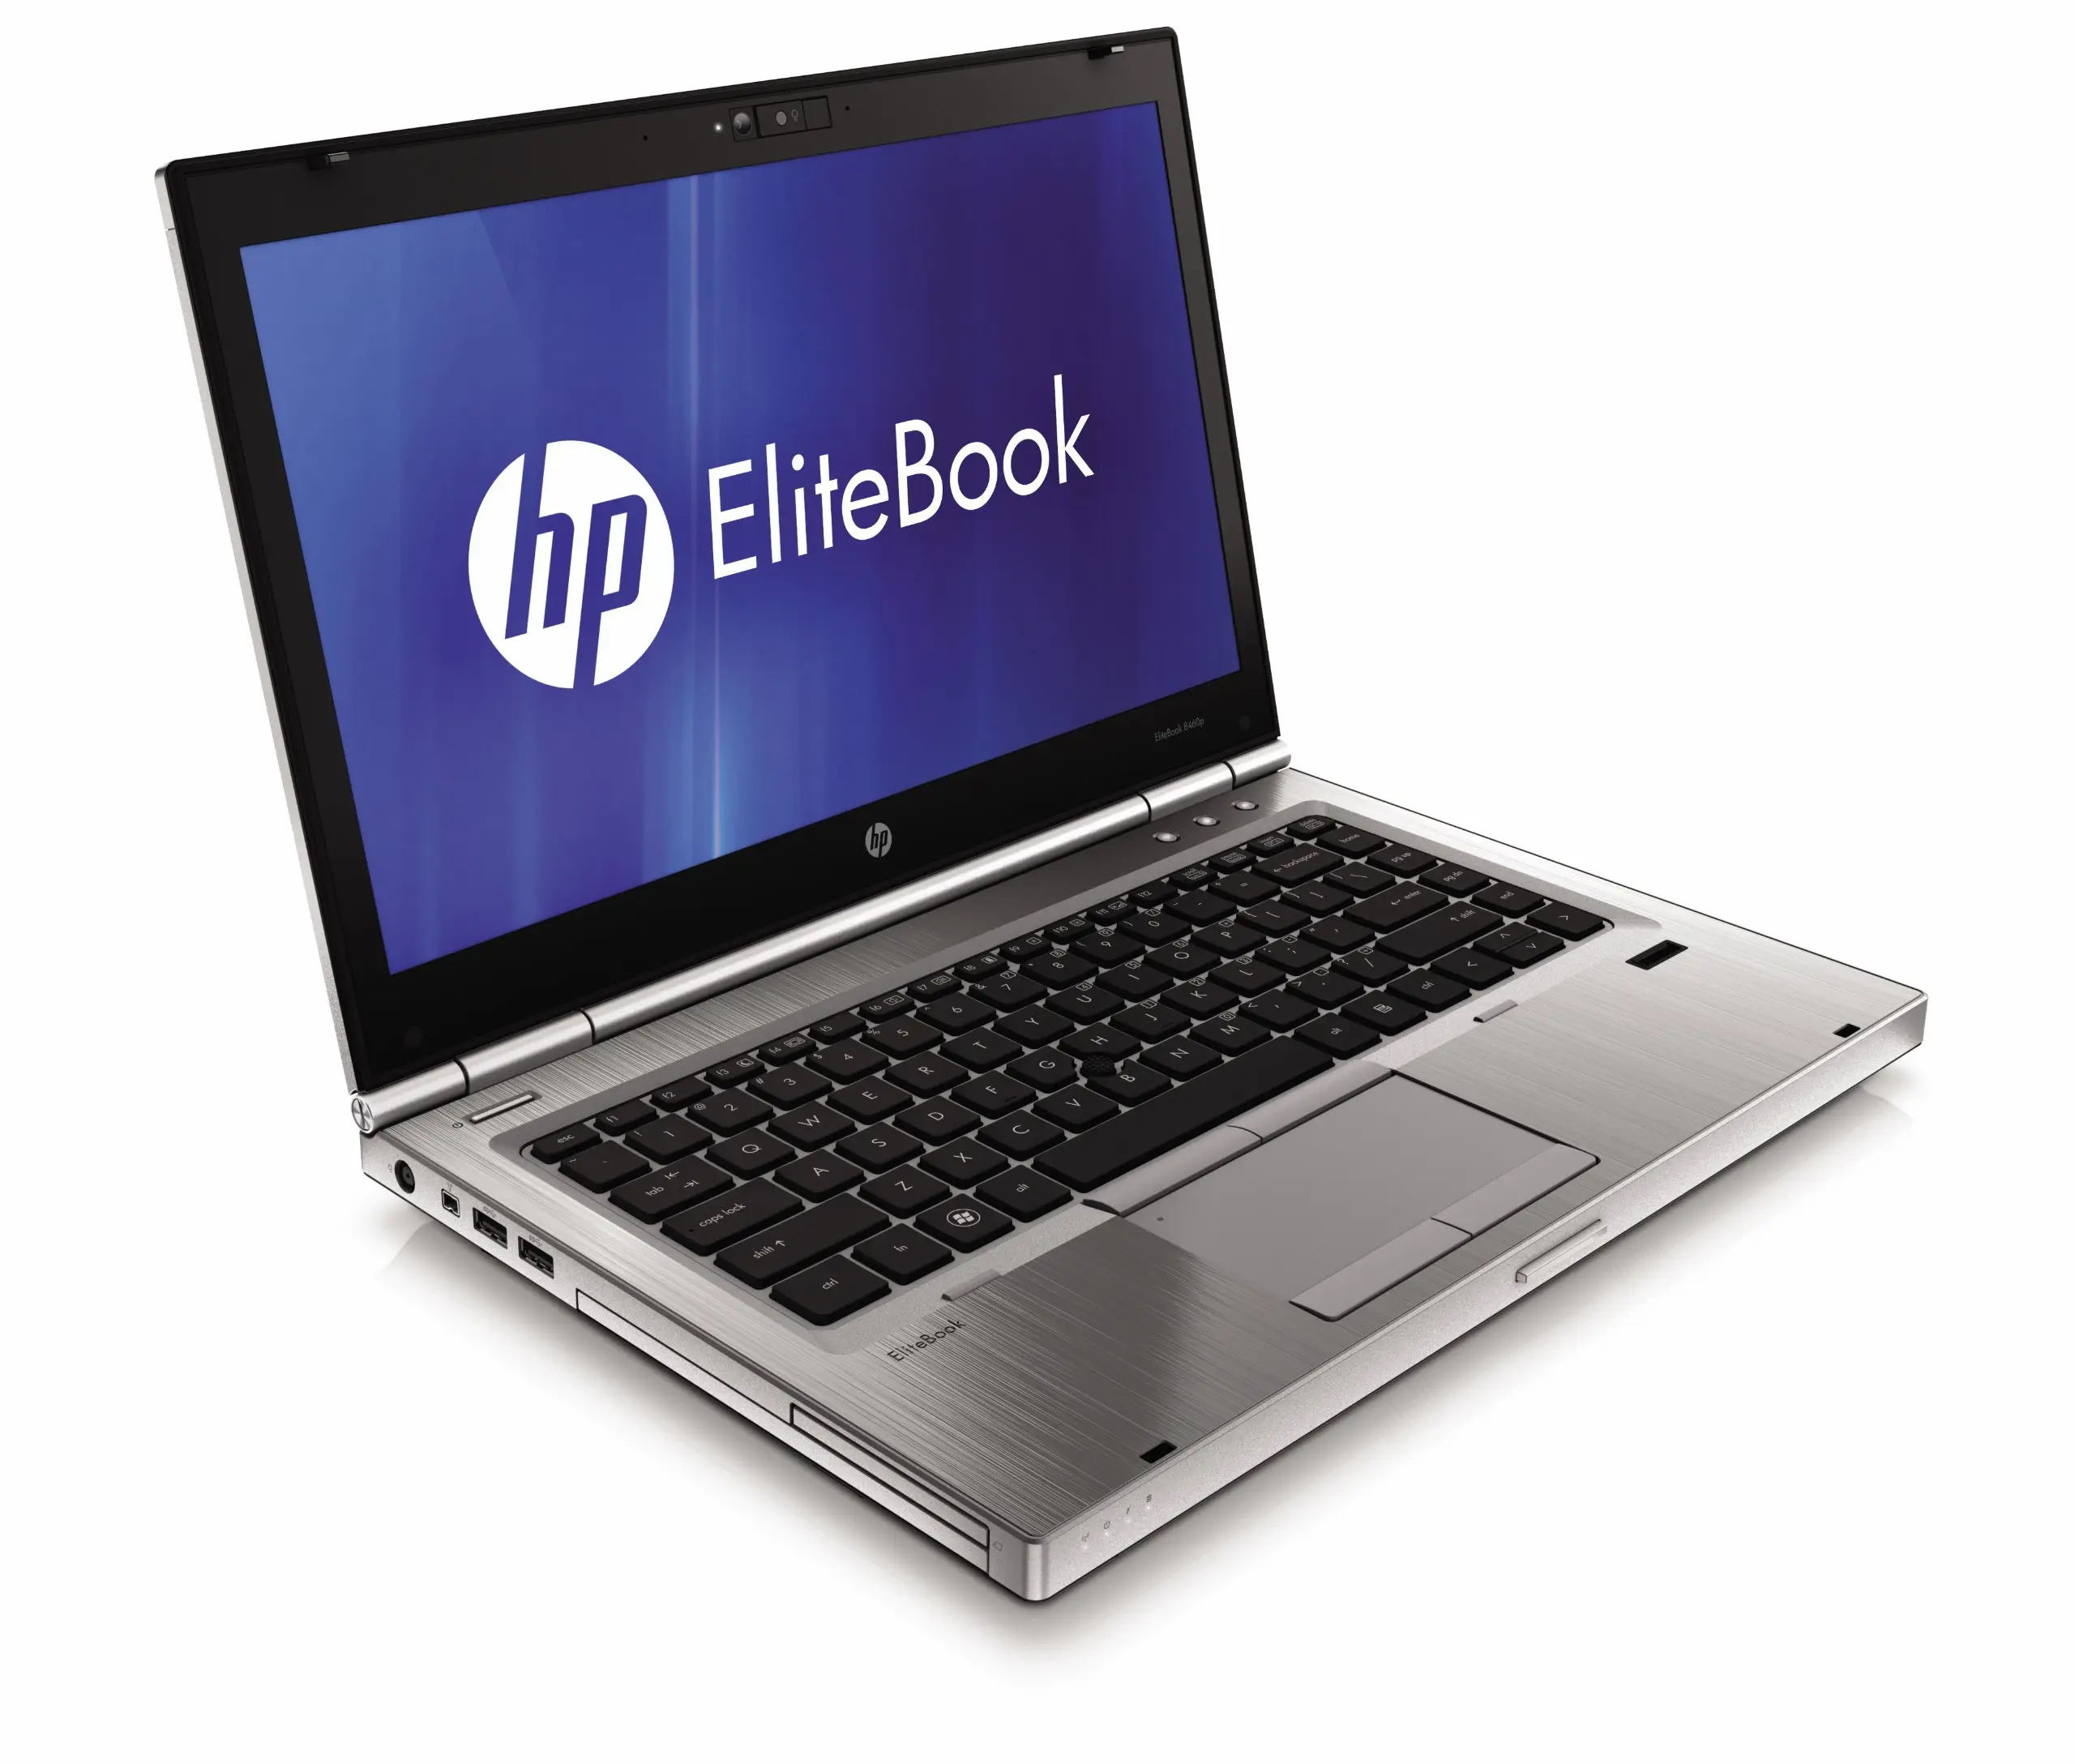 hewlett-packard elitebook 8460p i5 2520m - What generation is the HP I5-2520M